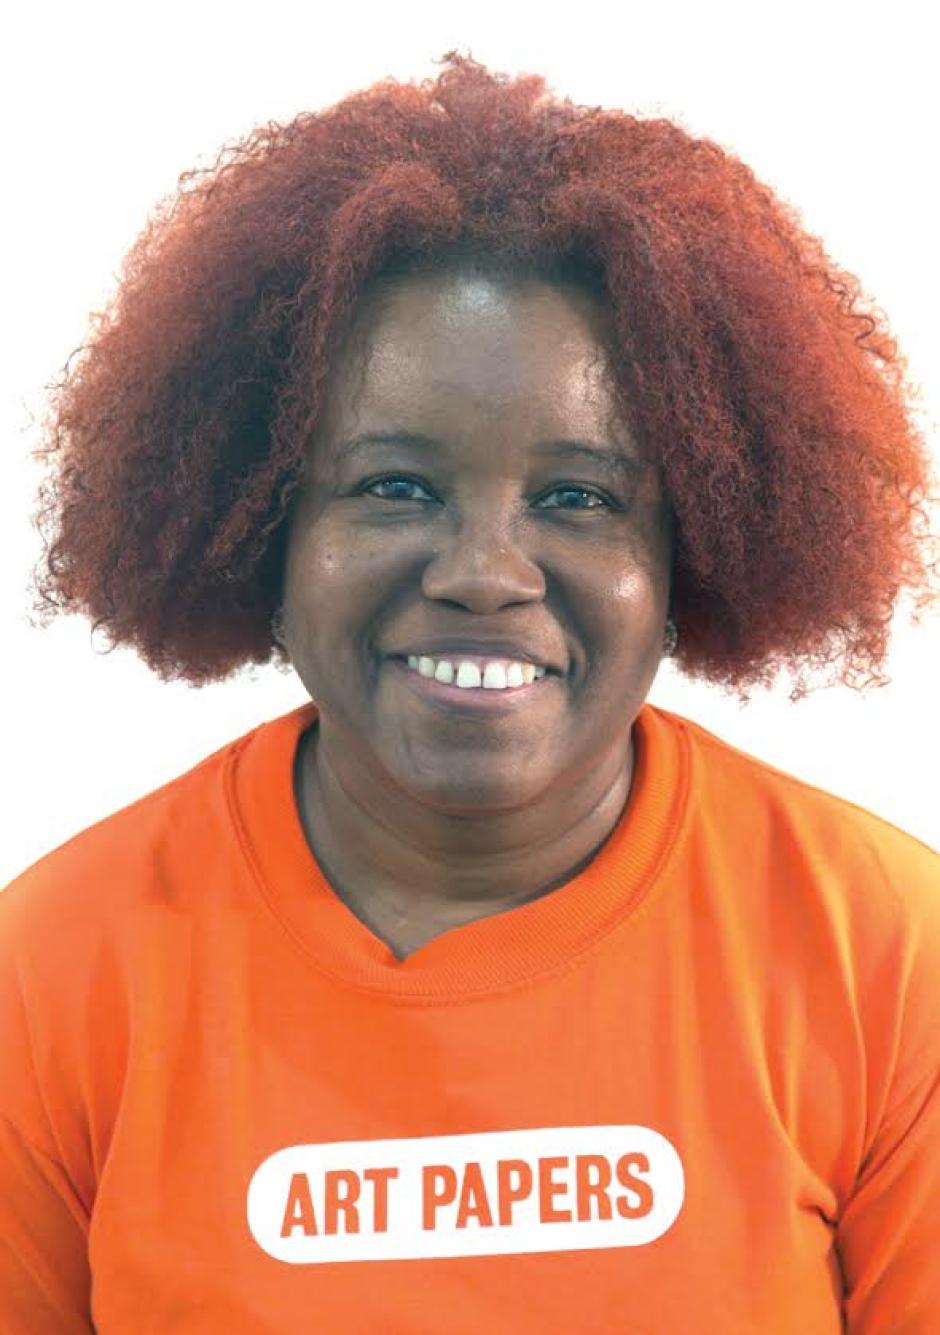 Fatimah Tuggar Looks straight forward wearing an orange shirt that reads "Art Papers"